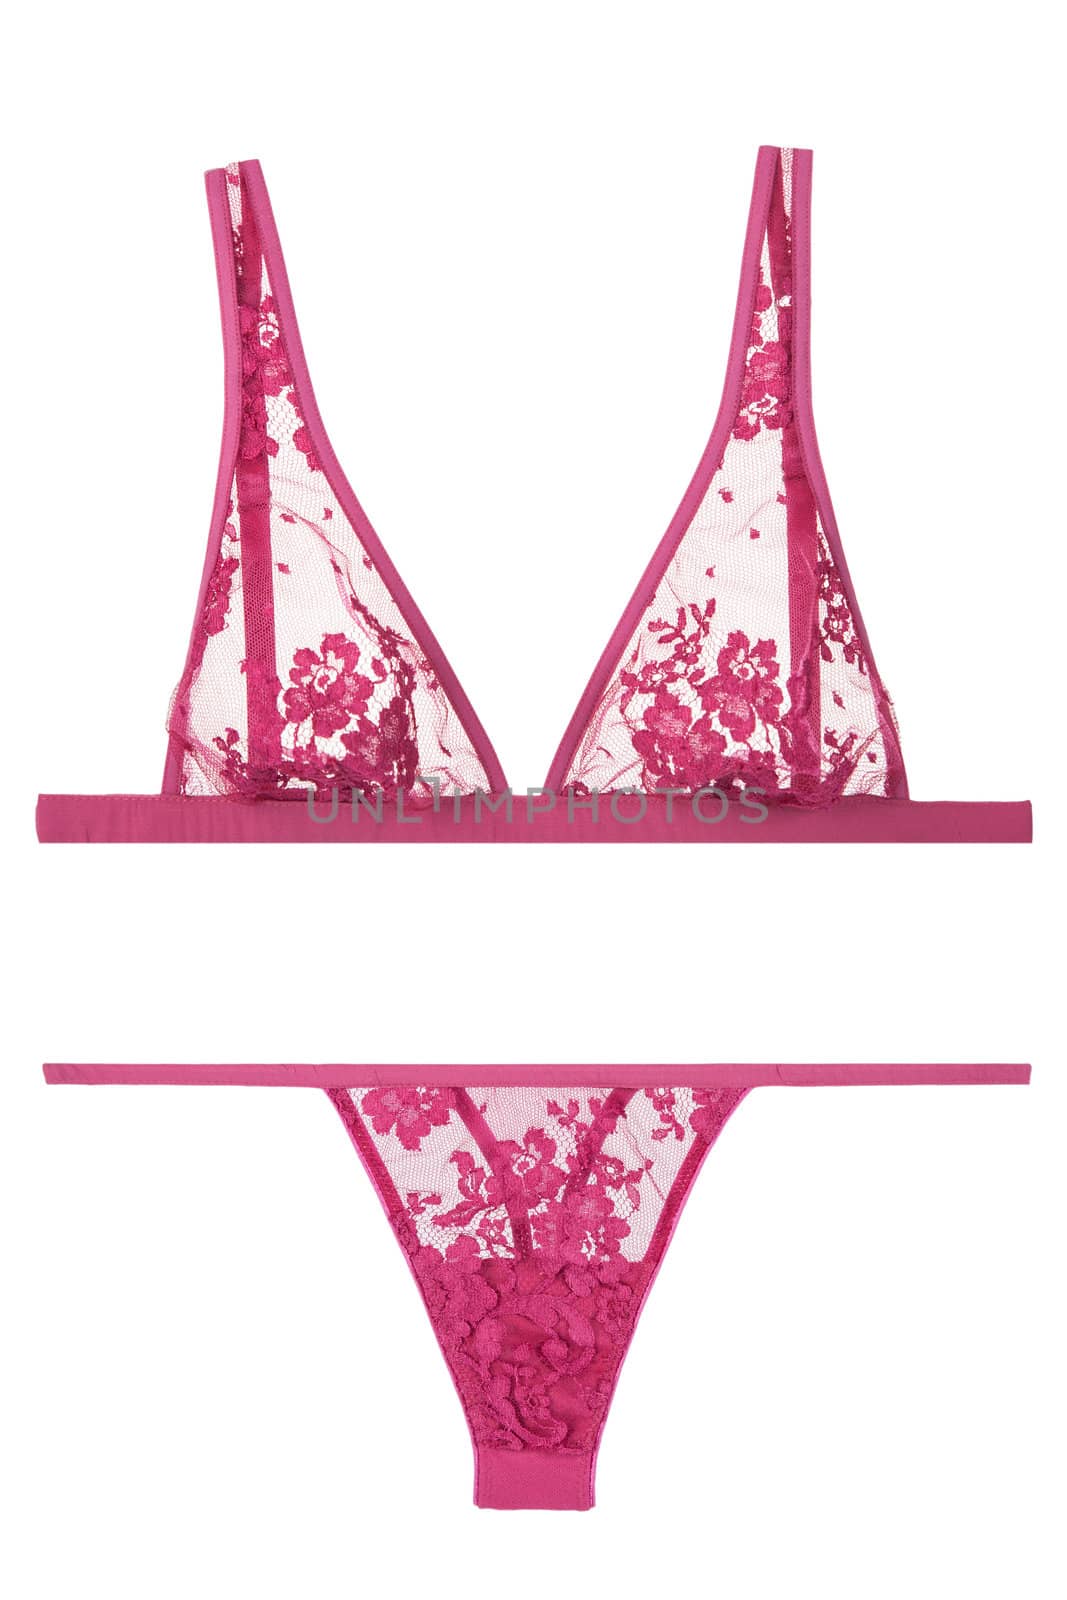 pink bra and panties, woman lingerie by VictorO